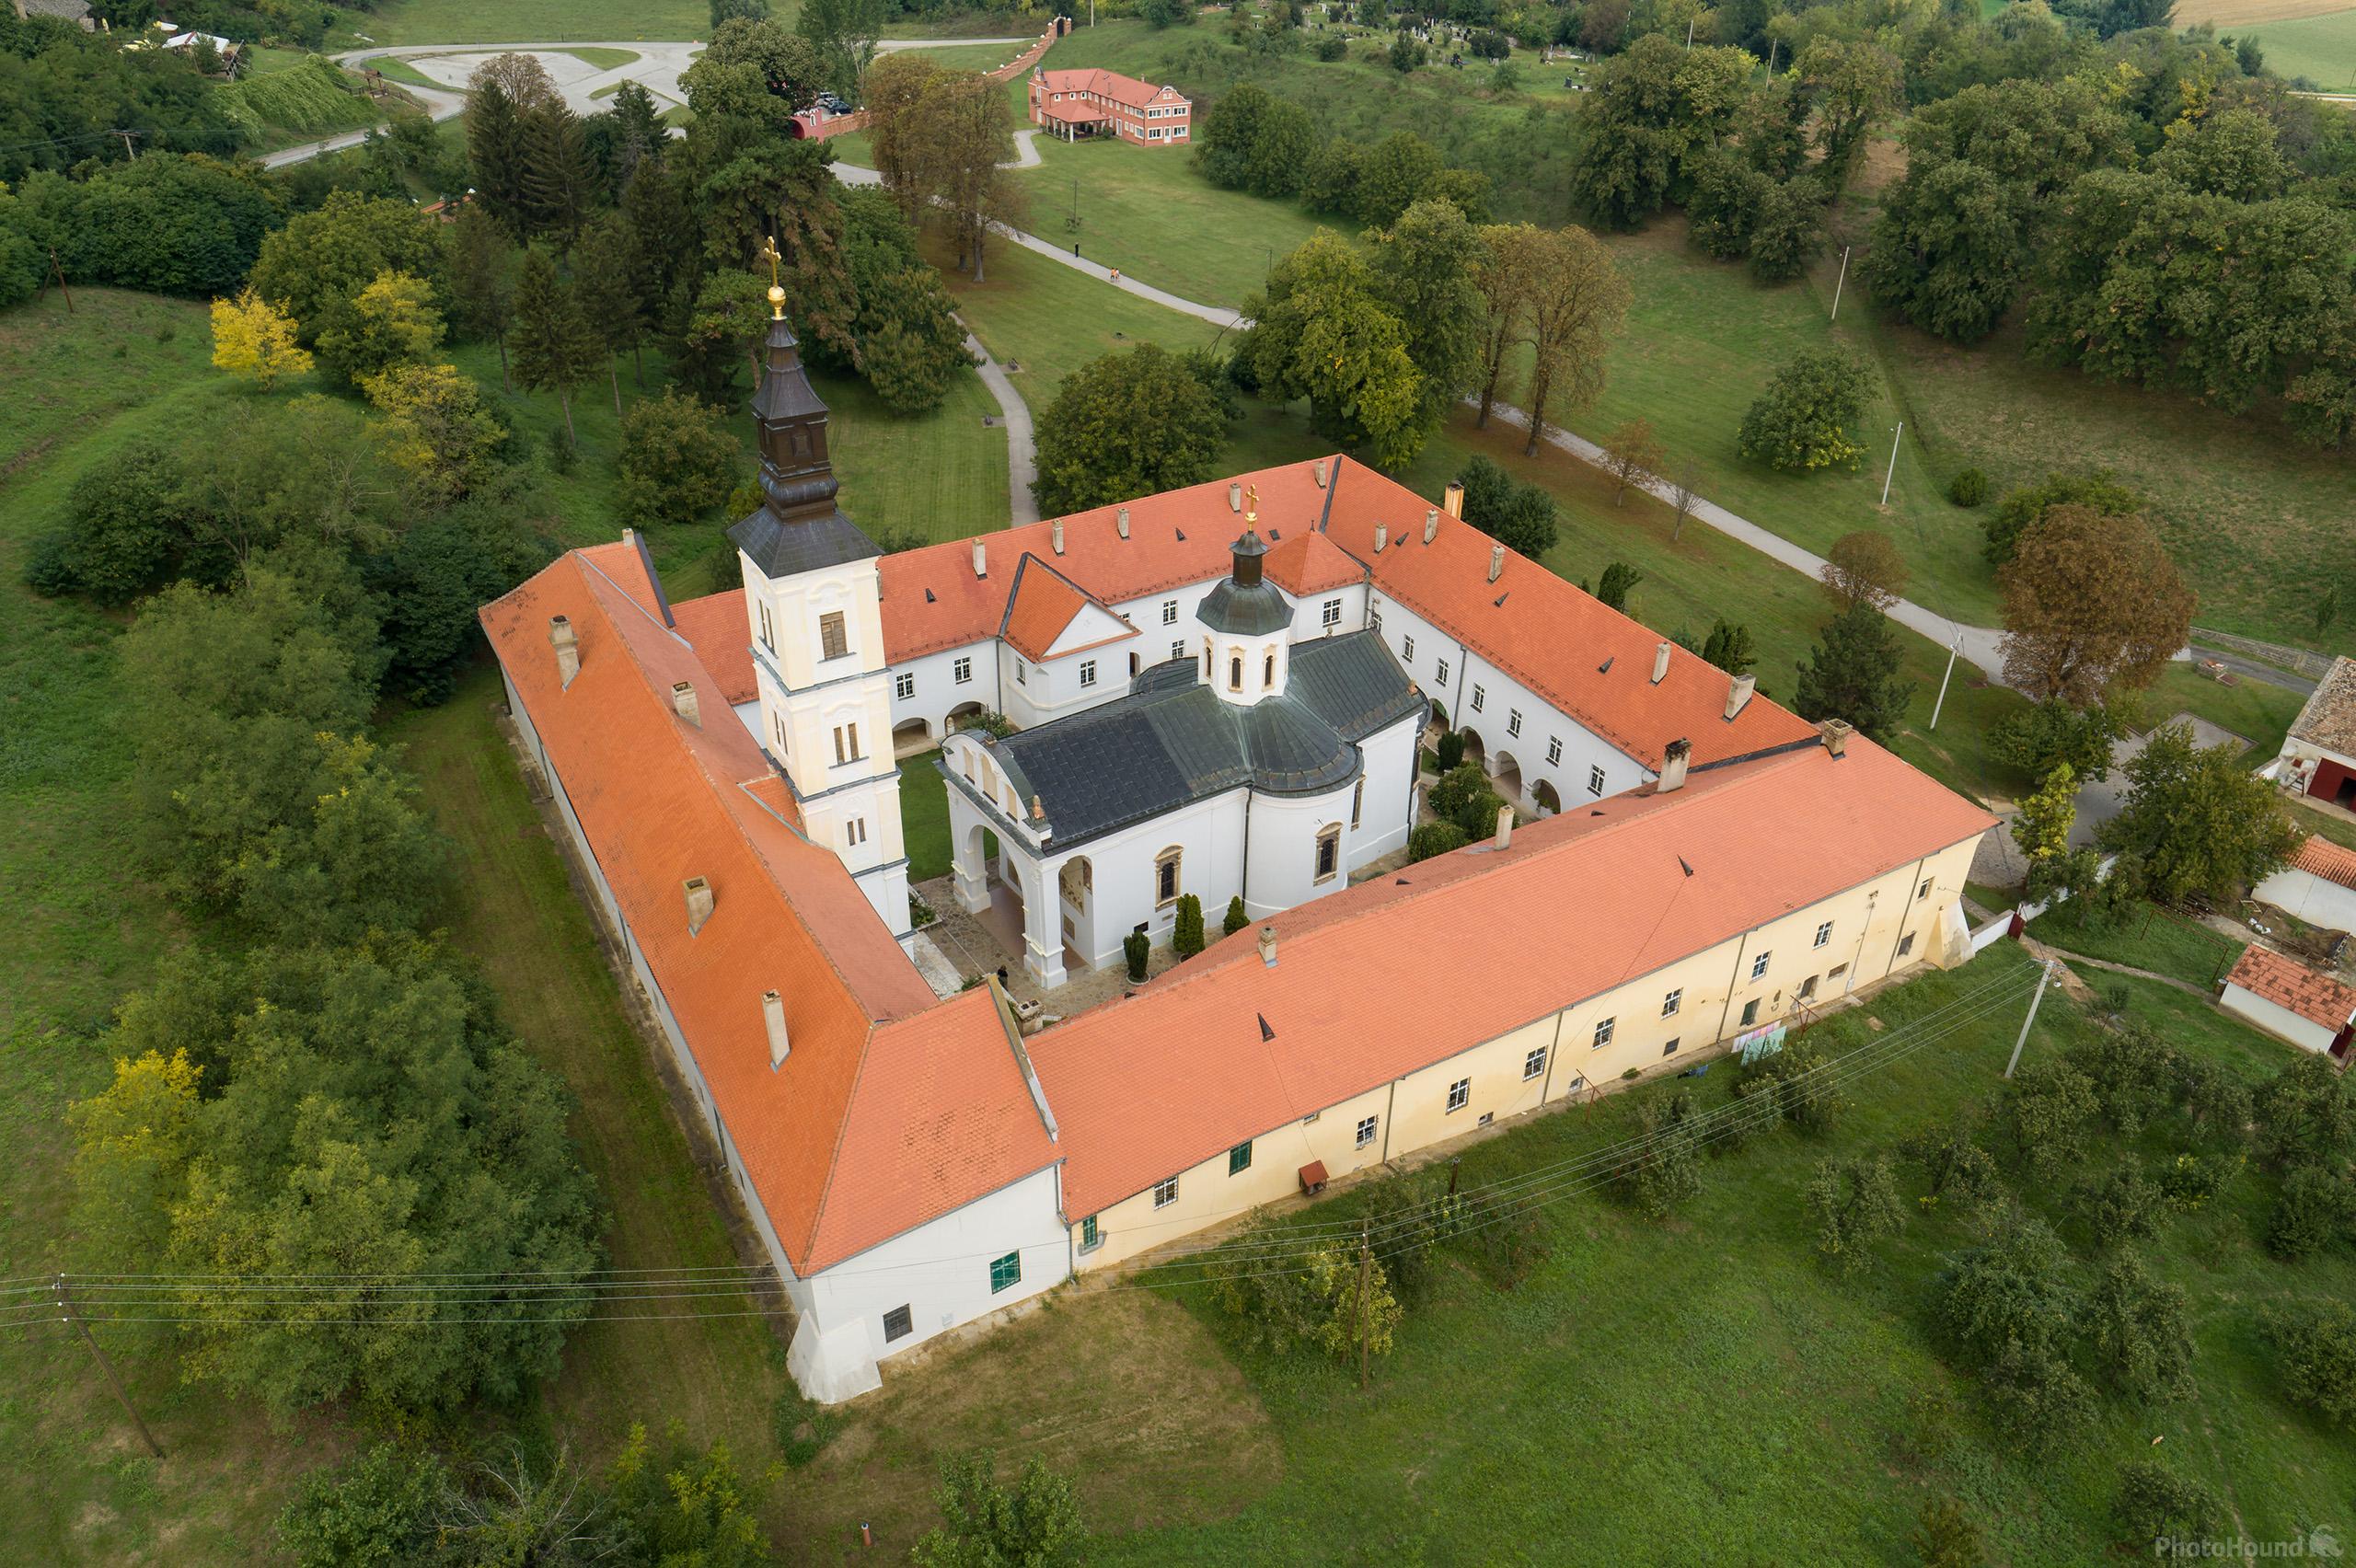 Image of Krušedol Monastery by Luka Esenko